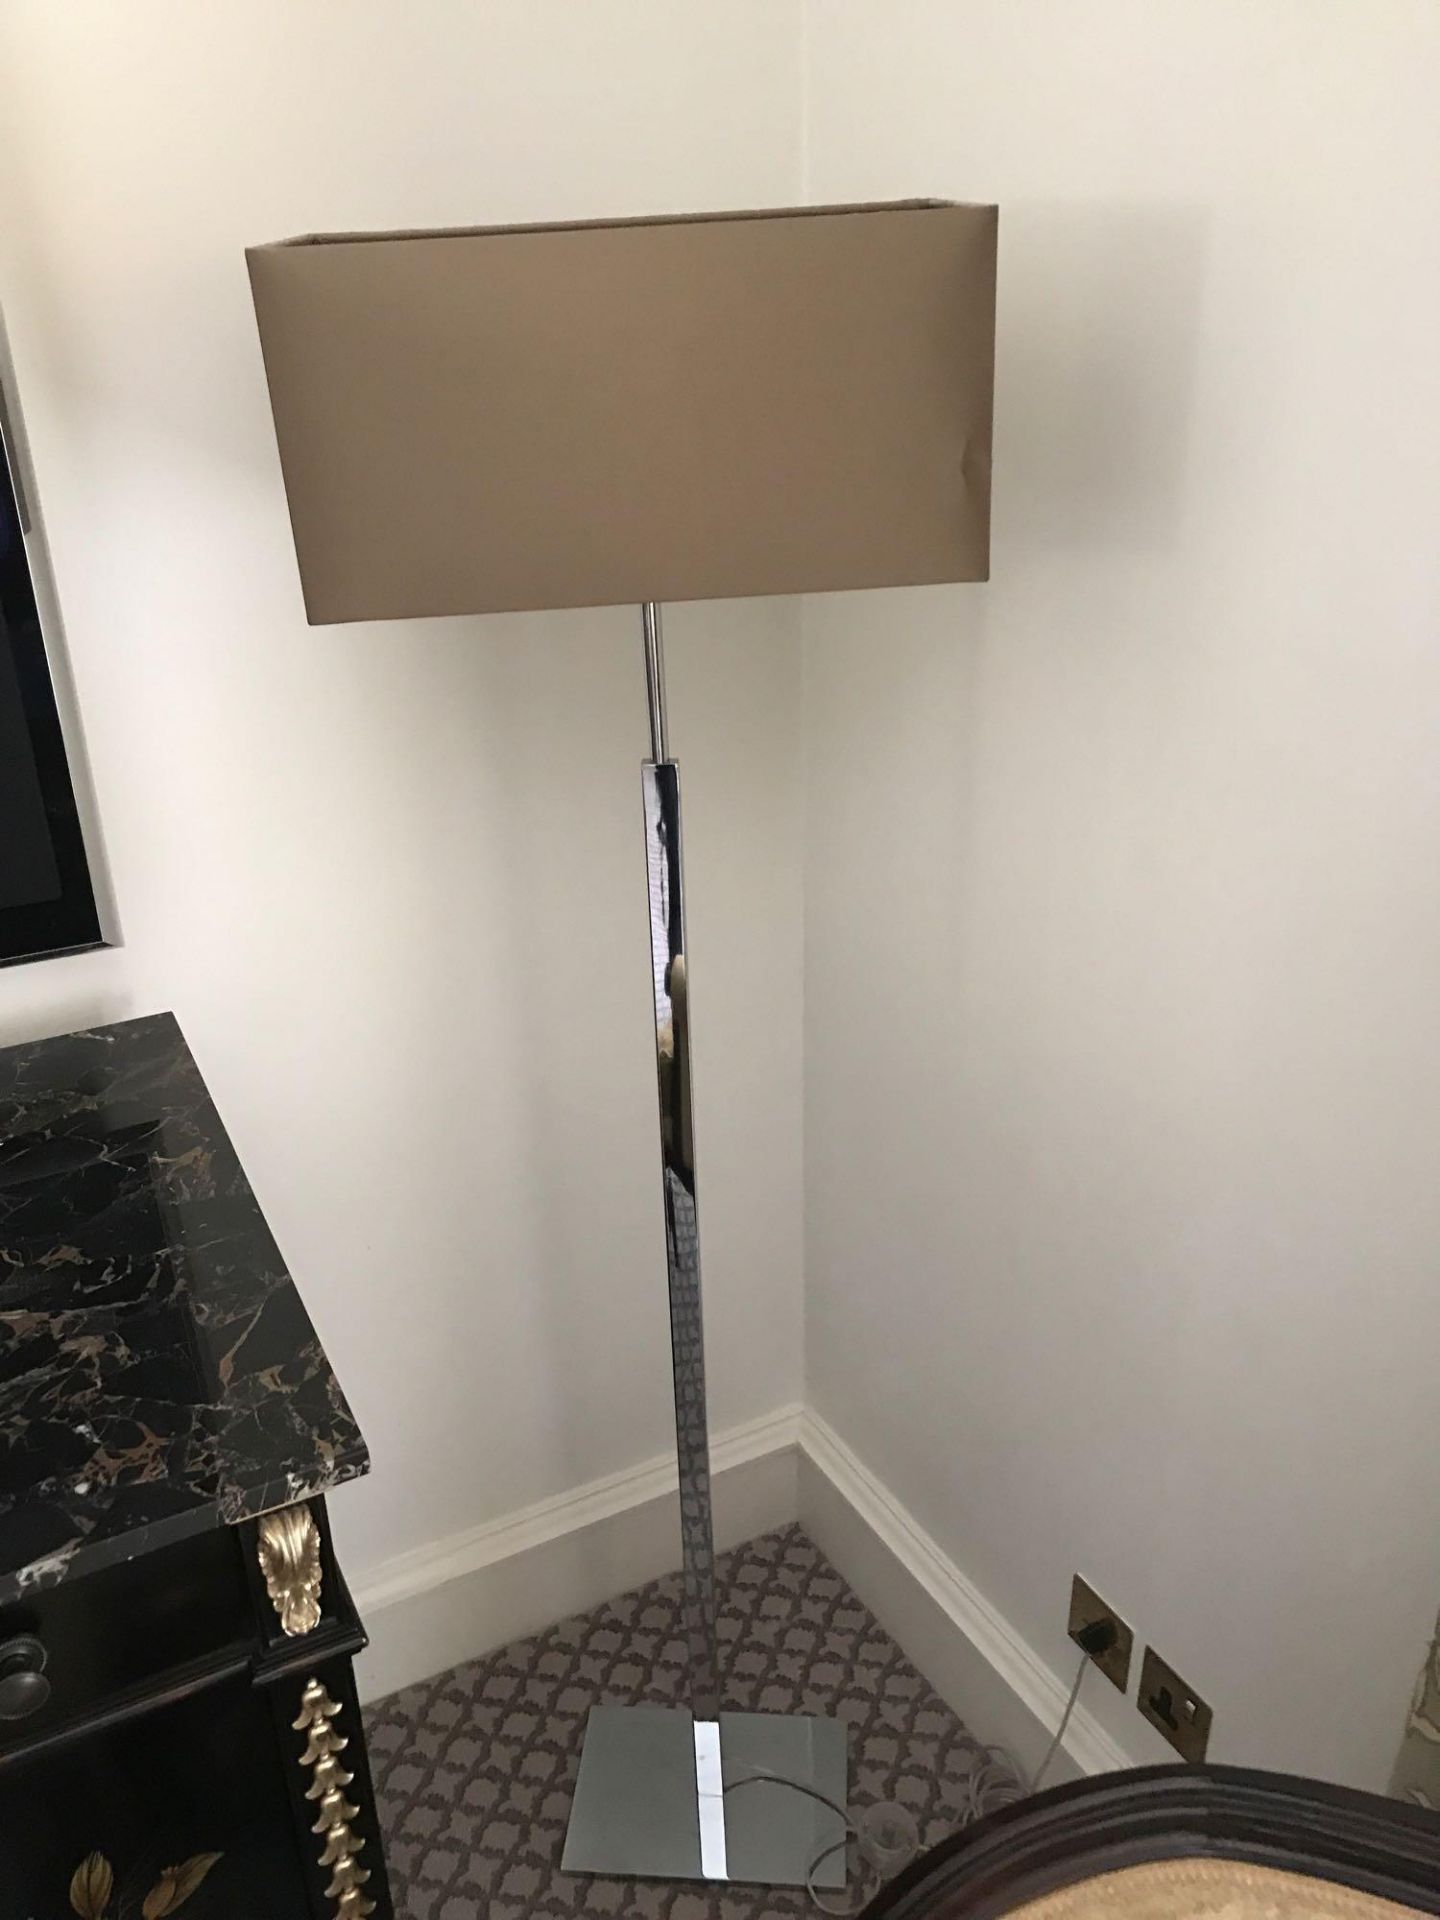 Heathfield And Co Dakota Contemporary Floor Lamp Chrome Complete With Shade 158cm Room 605